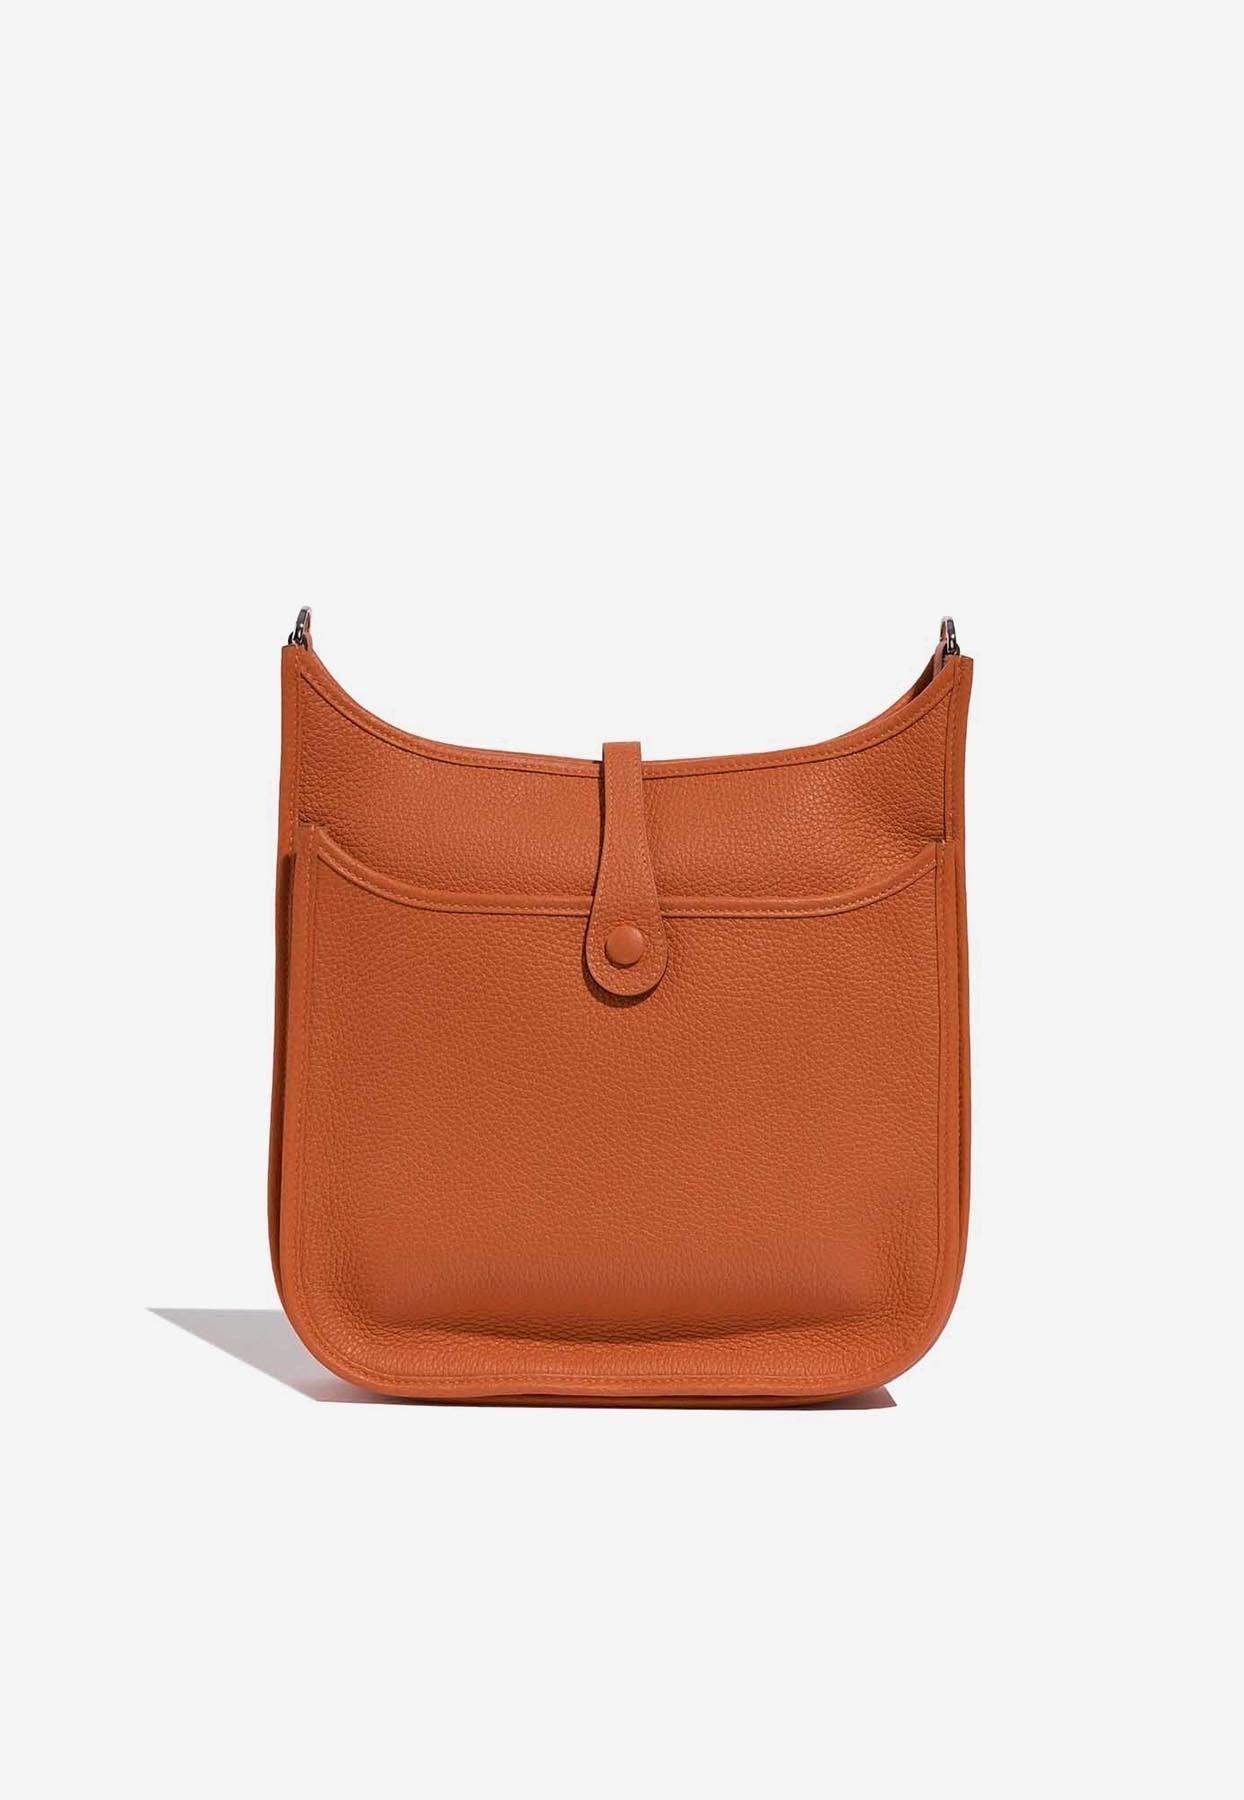 Hermes Evelyne Bag in Brown (Tan) or Orange? Same dilemma/ flip as